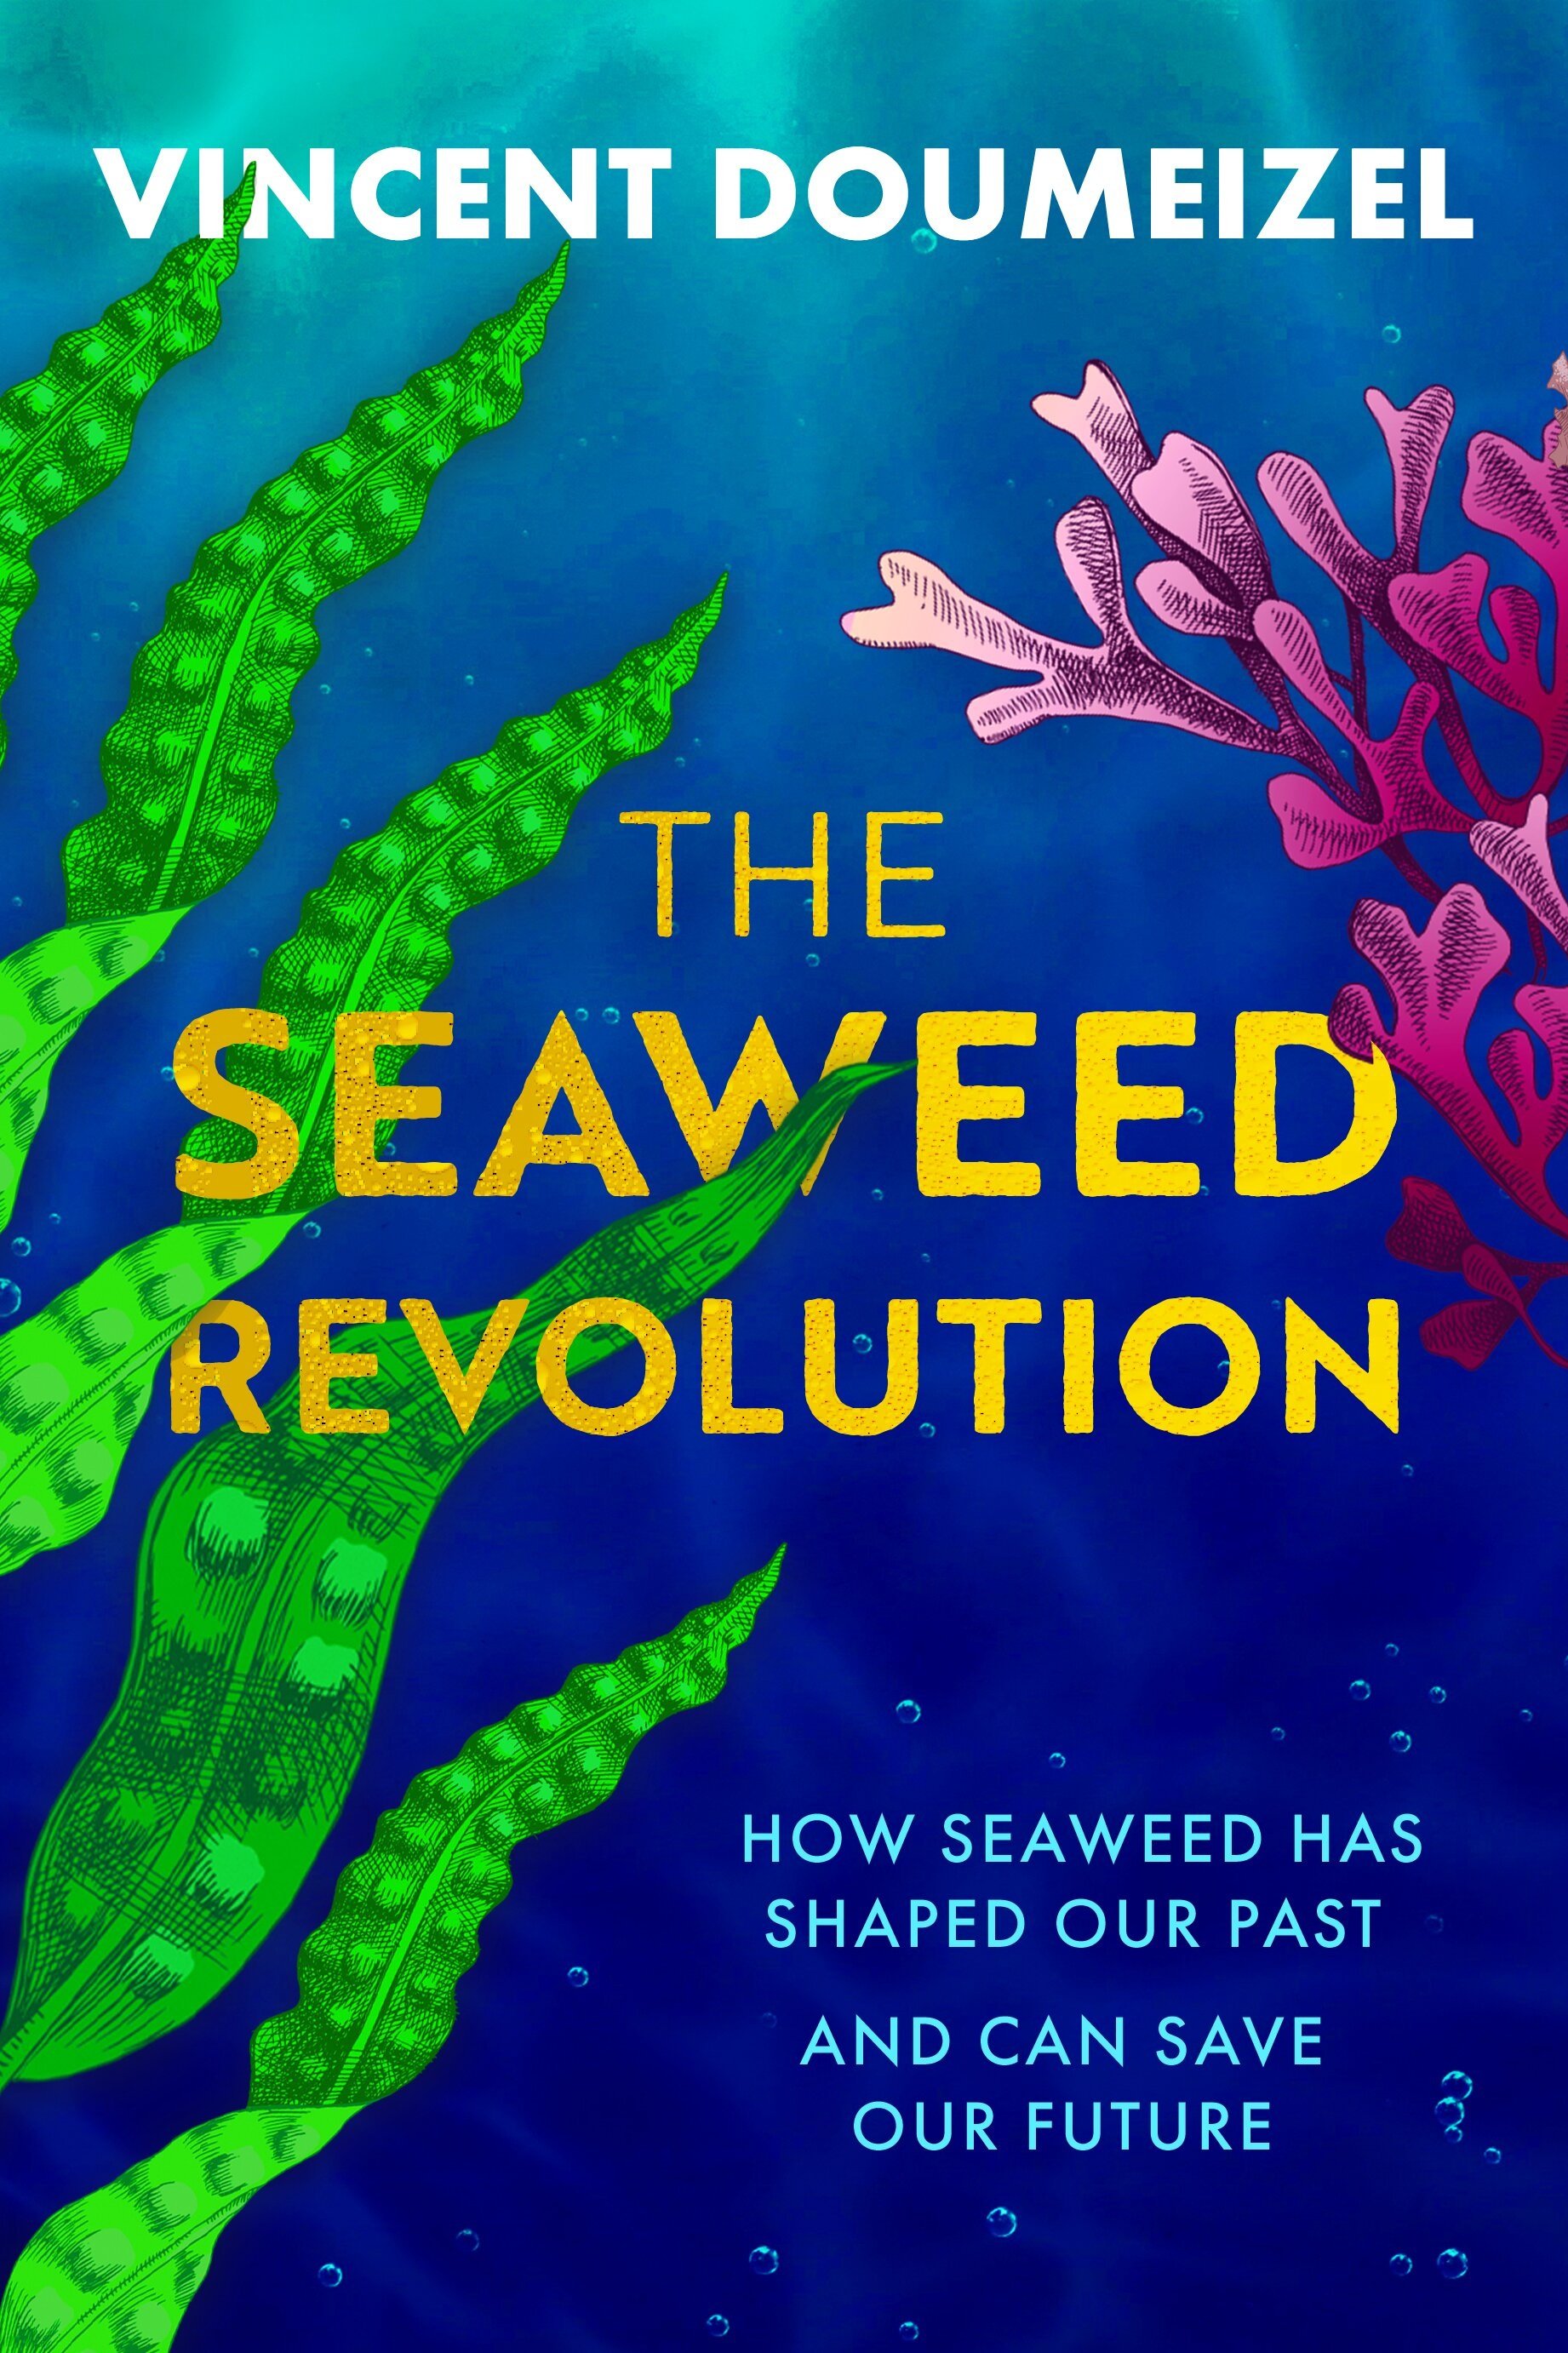 THE SEAWEED REVOLUTION - VINCENT DOUMEIZEL